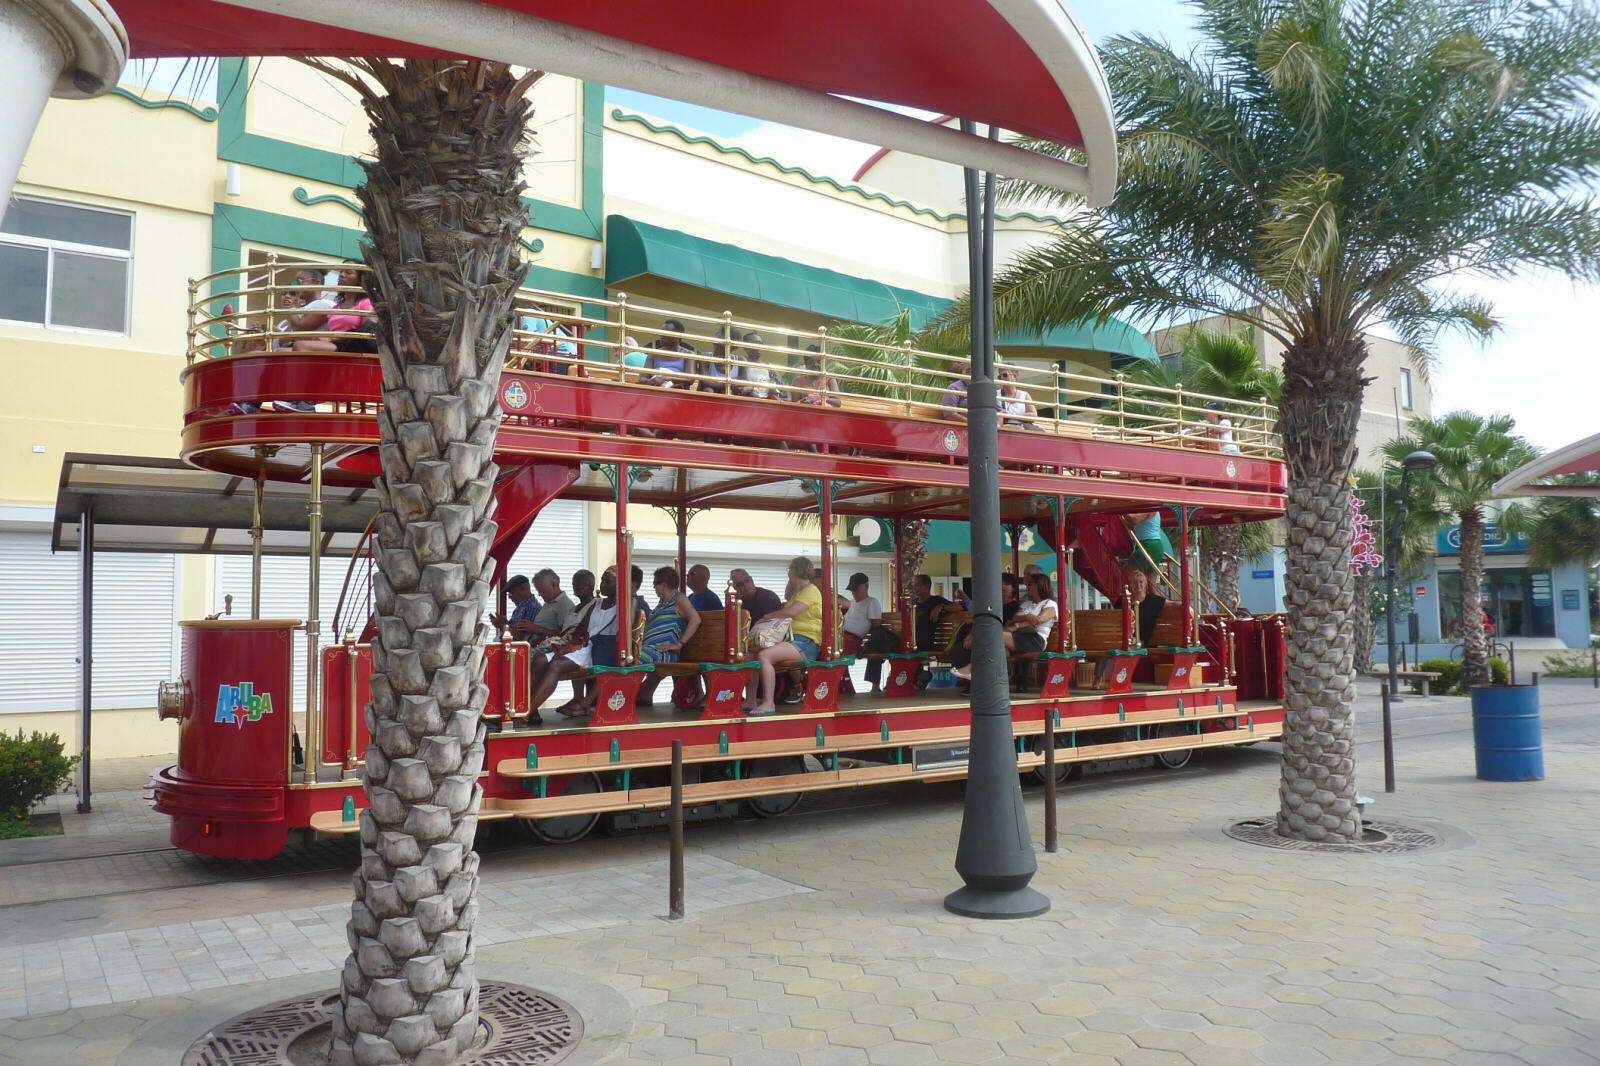 The tourist trolley tram in Oranjestad, Aruba, Caribbean